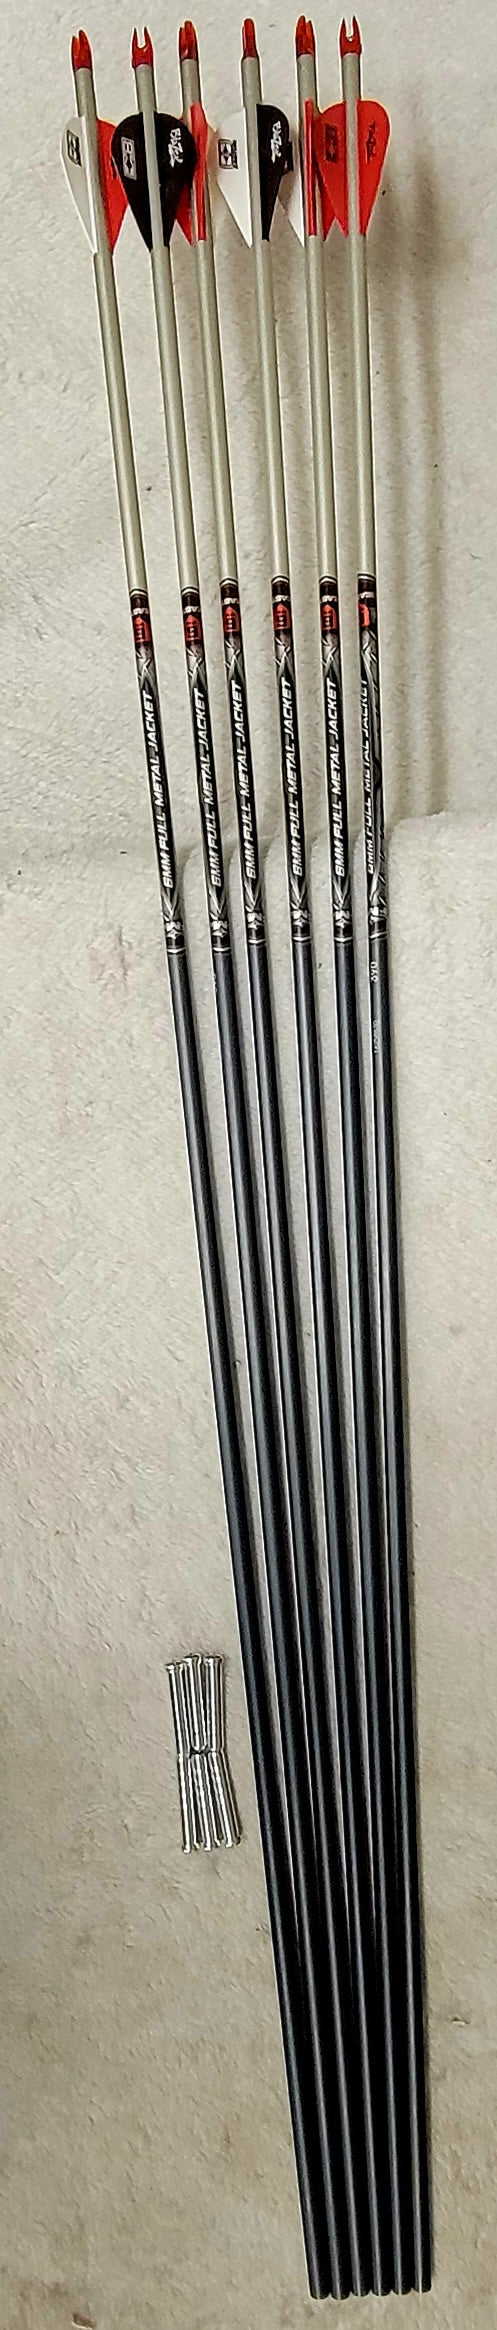 Easton 6MM Full Metal Jacket Carbon Fiber Arrow 390 w/ Inserts - Pack of 6